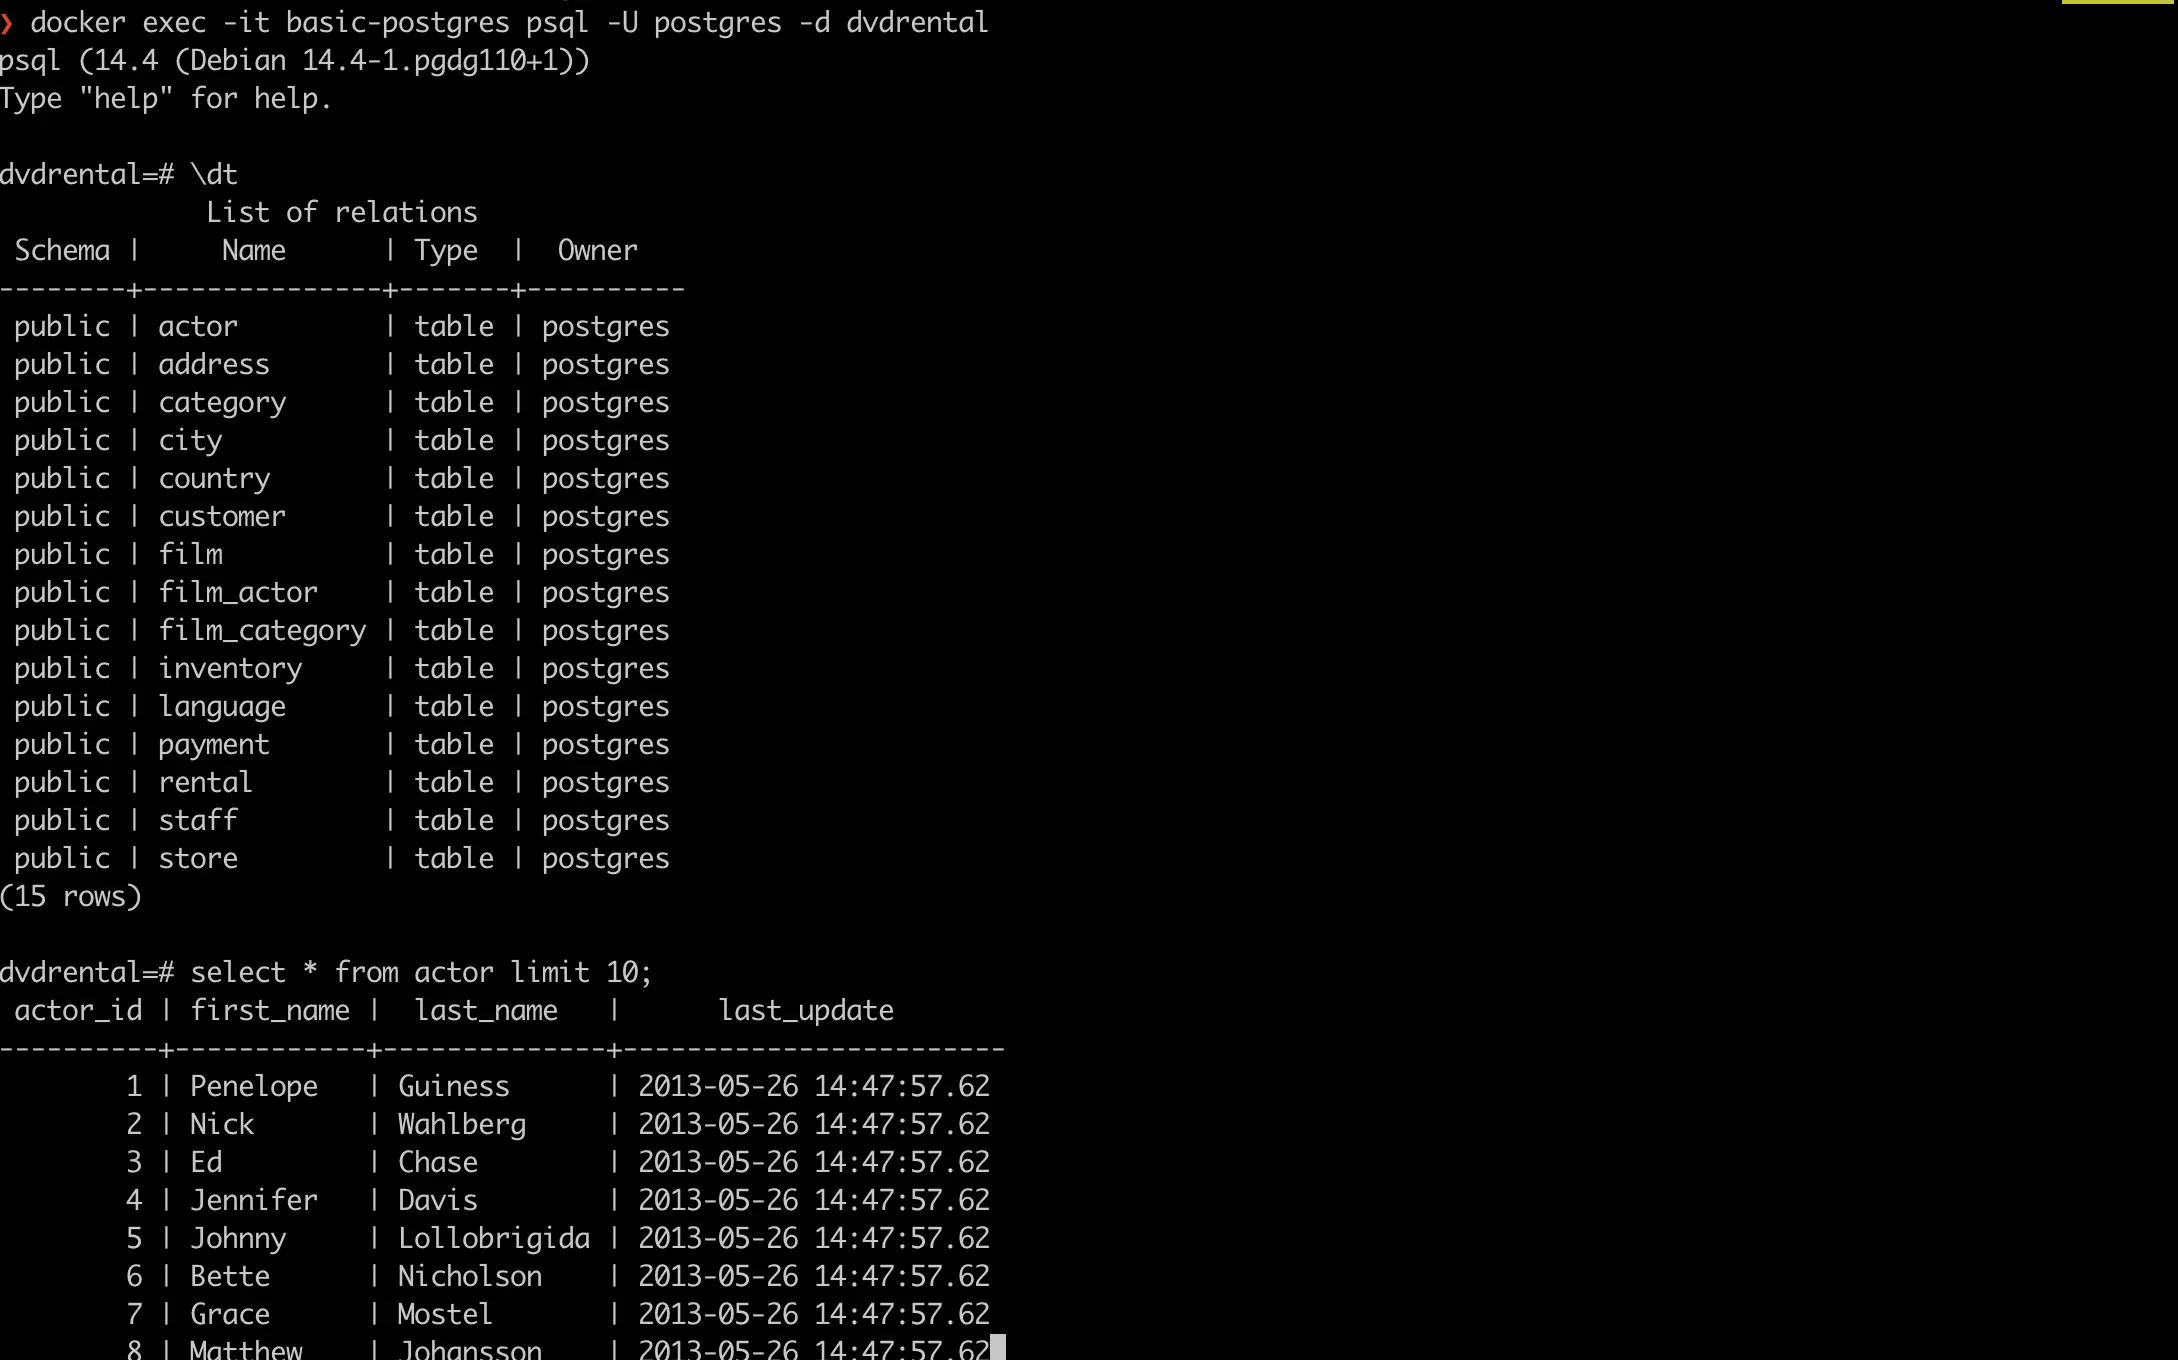 Screen shot of terminal showing psql investigation of dvdrental sample database